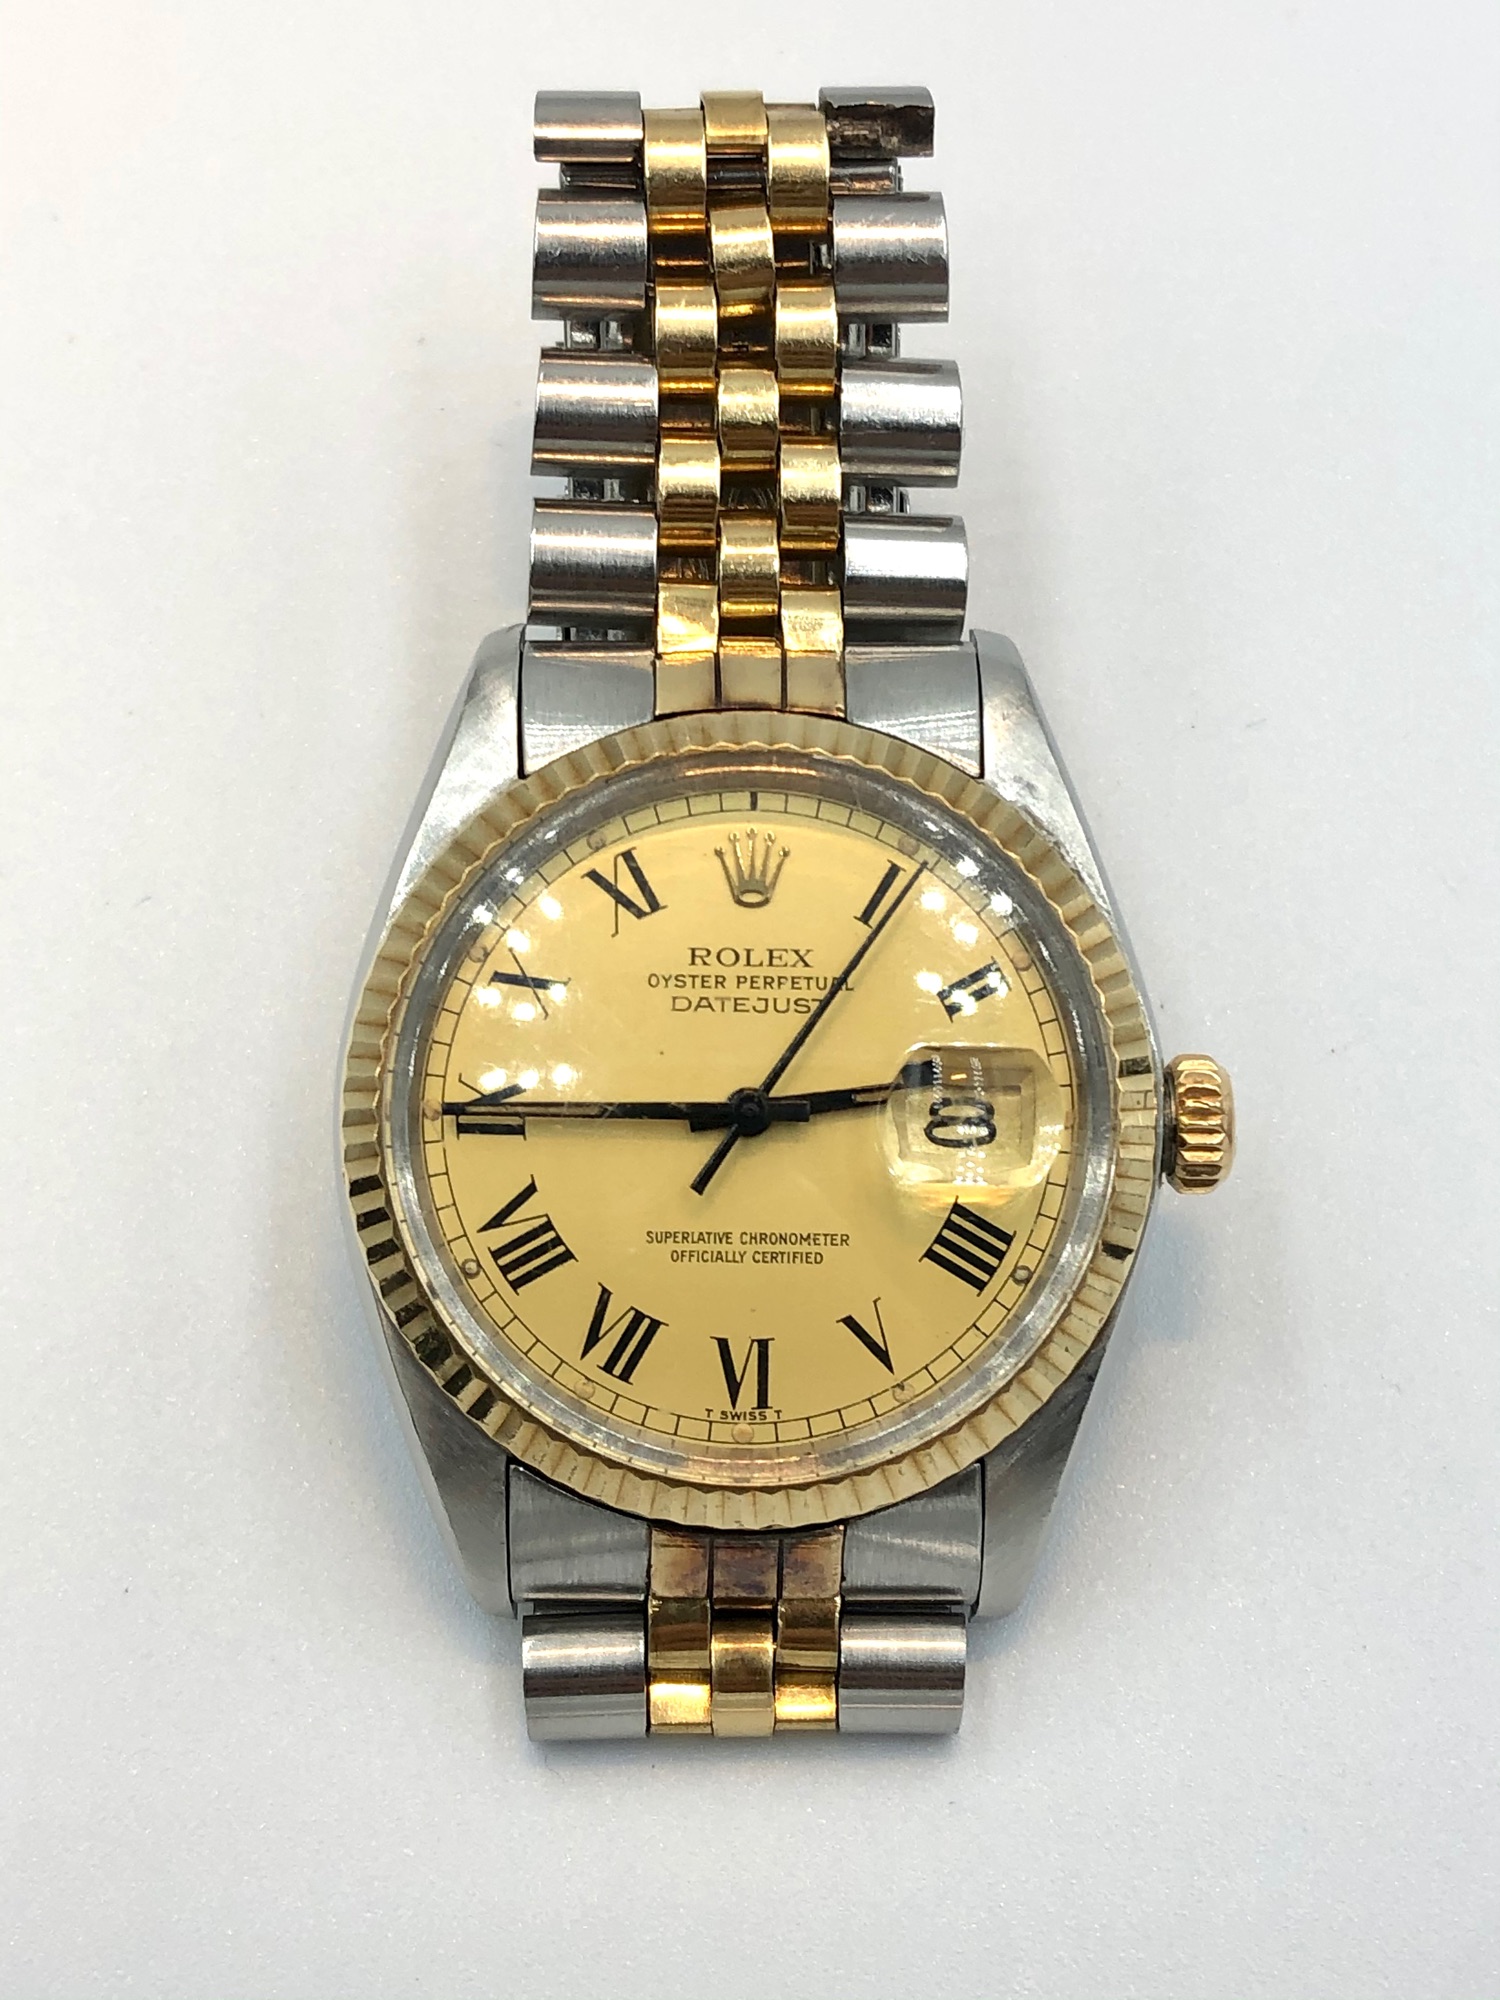 Rolex Oyster Perpeptual Datejust 16013 36mm Two tone bracelet 2กษัตริย์ หน้าปัดเลขโรมัน Authentic รับประกันนาฬิกา Rolex แท้ ไม่แท้คืนเงินพร้อมค่าเสียเวลา 100,000บาท